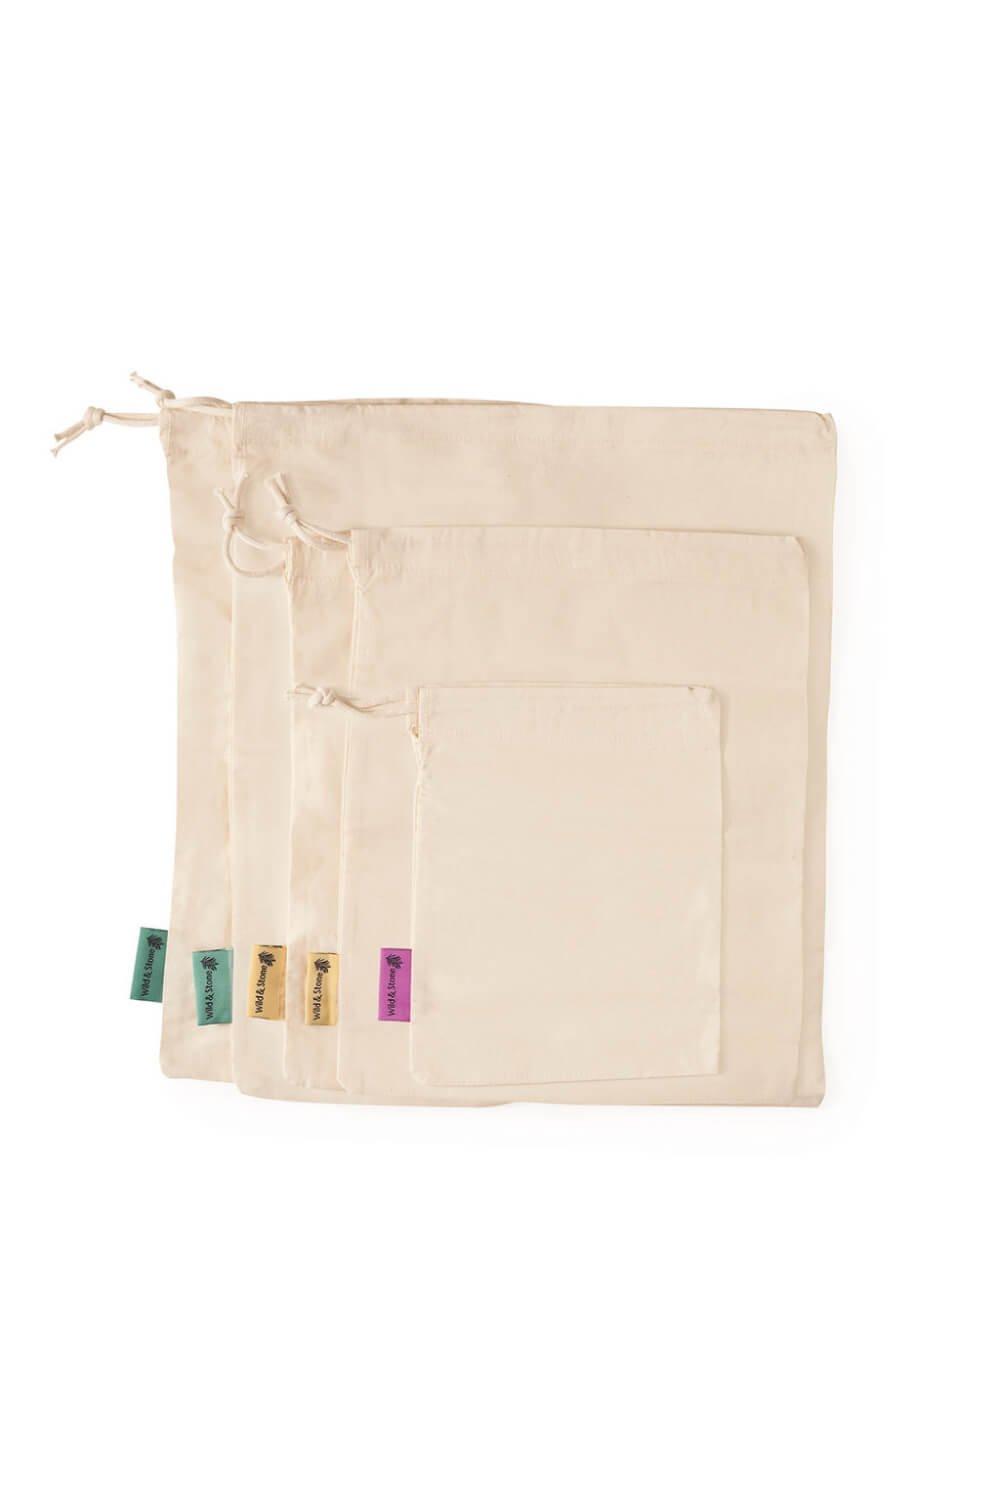 Reusable Canvas Produce Bags Organic Cotton 5 Pack